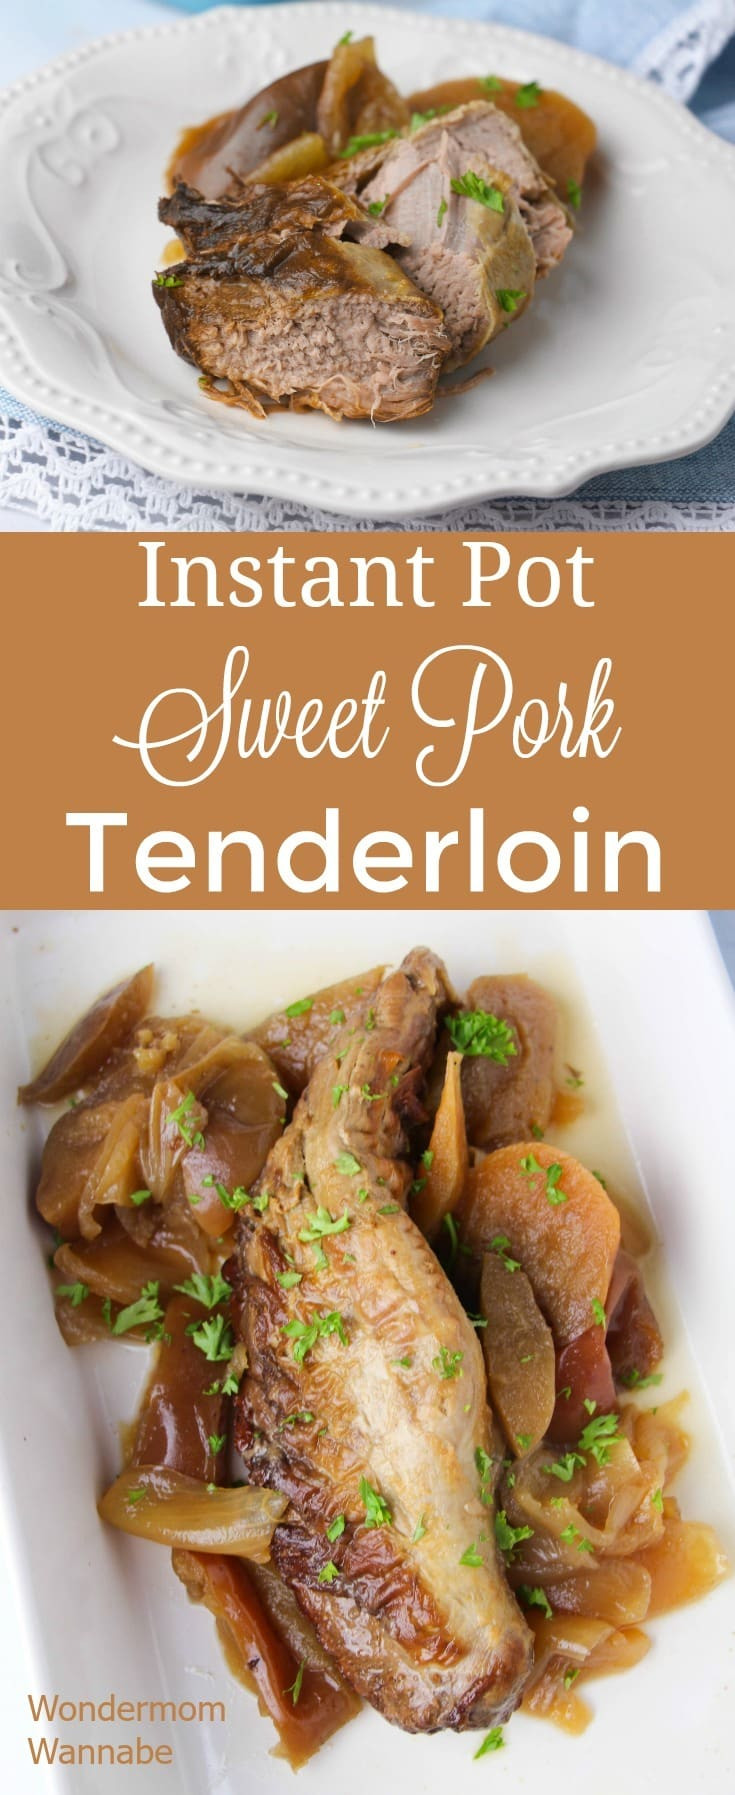 Instapot Pork Tenderloin
 Instant Pot Sweet Pork Tenderloin